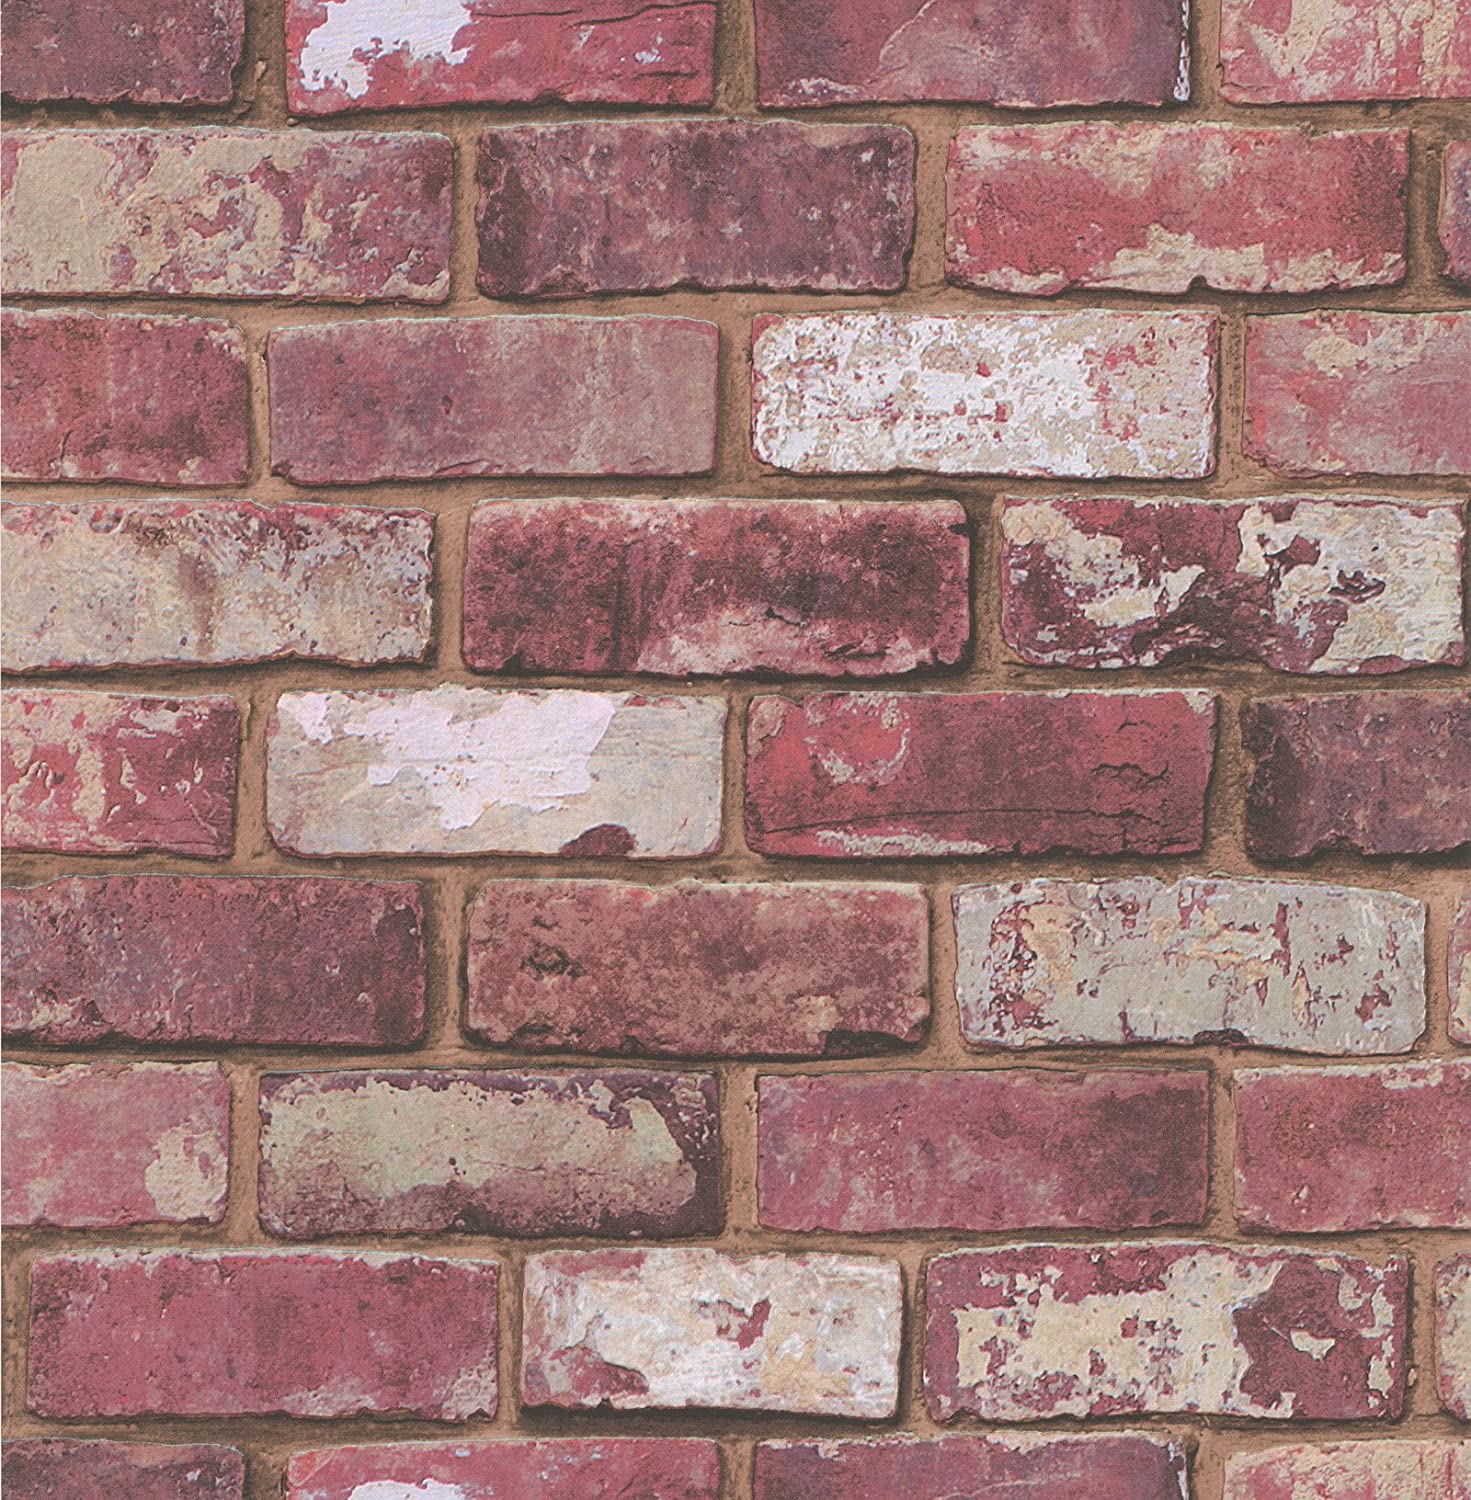 brick wallpaper uk,brickwork,brick,wall,pink,stone wall